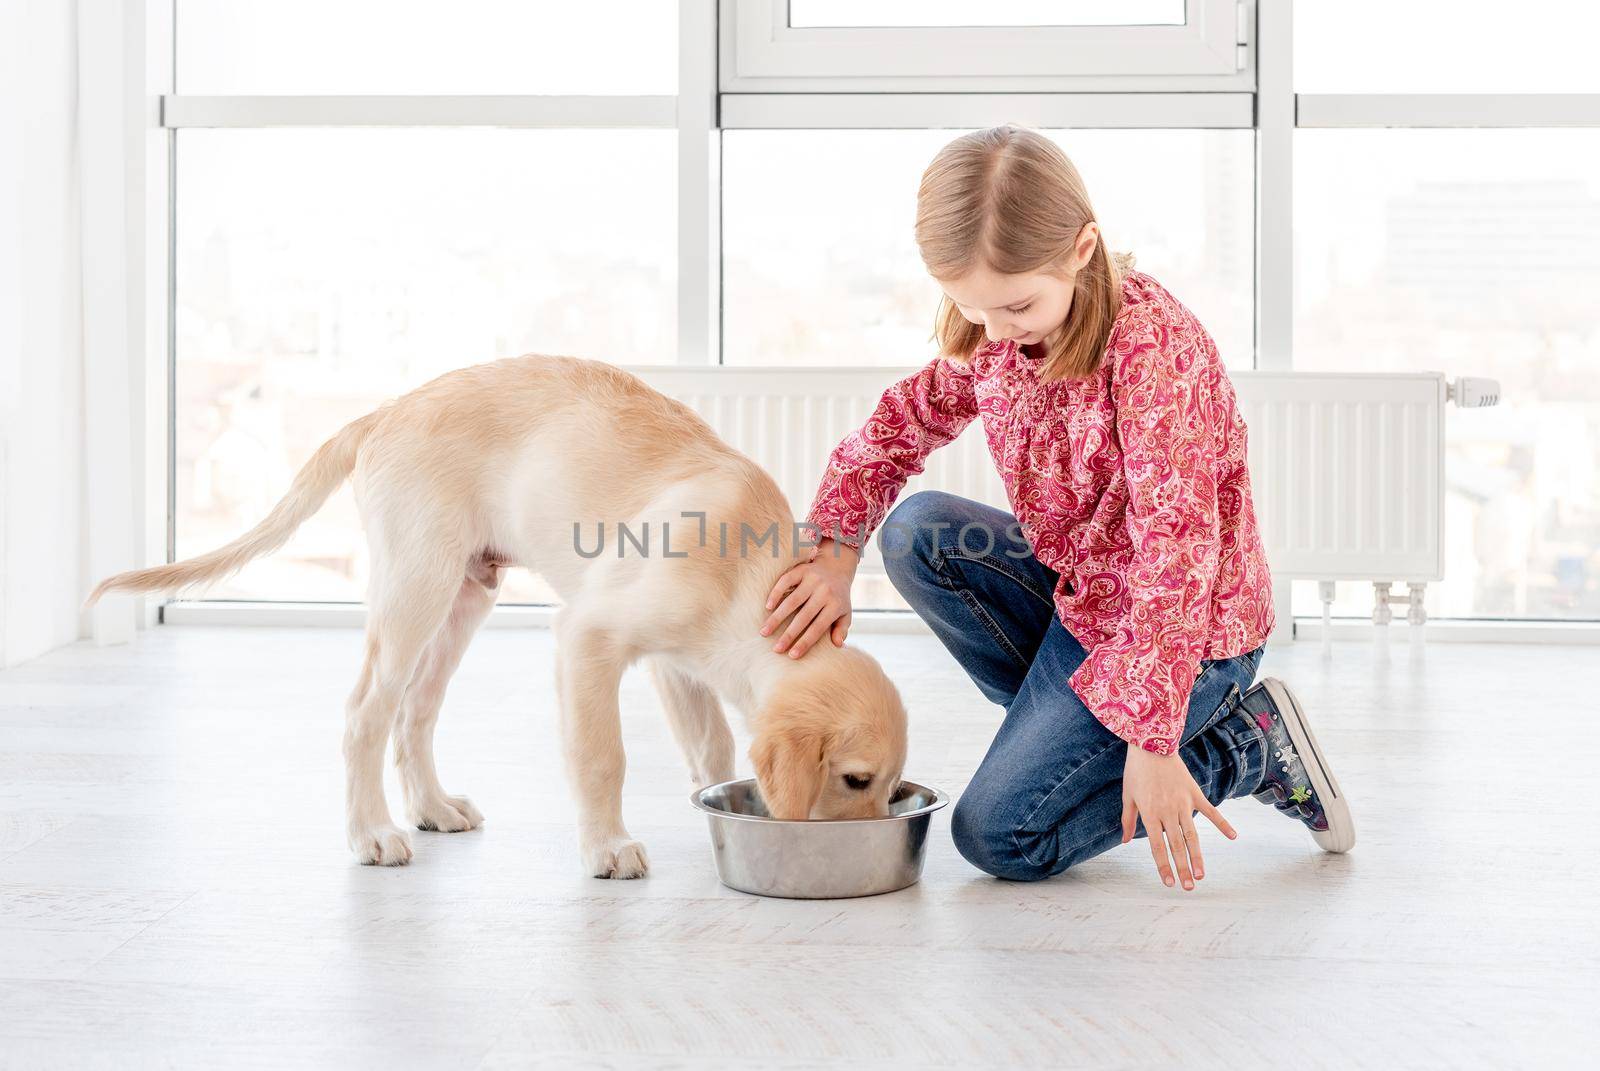 Girl giving food to dog by tan4ikk1